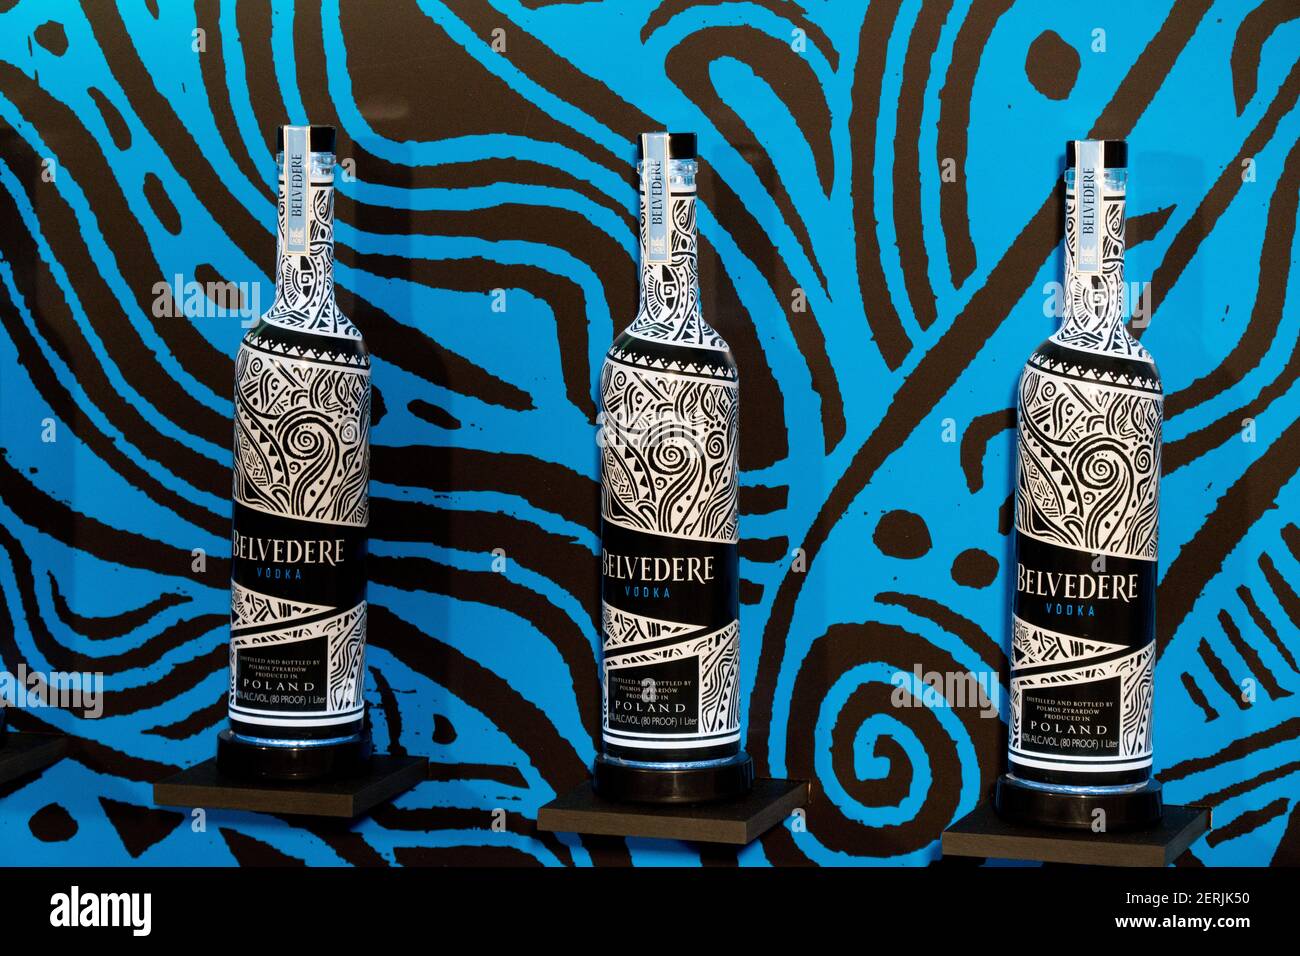 Laolu Senbanjo Designs a Limited Edition Belvedere Vodka Bottle